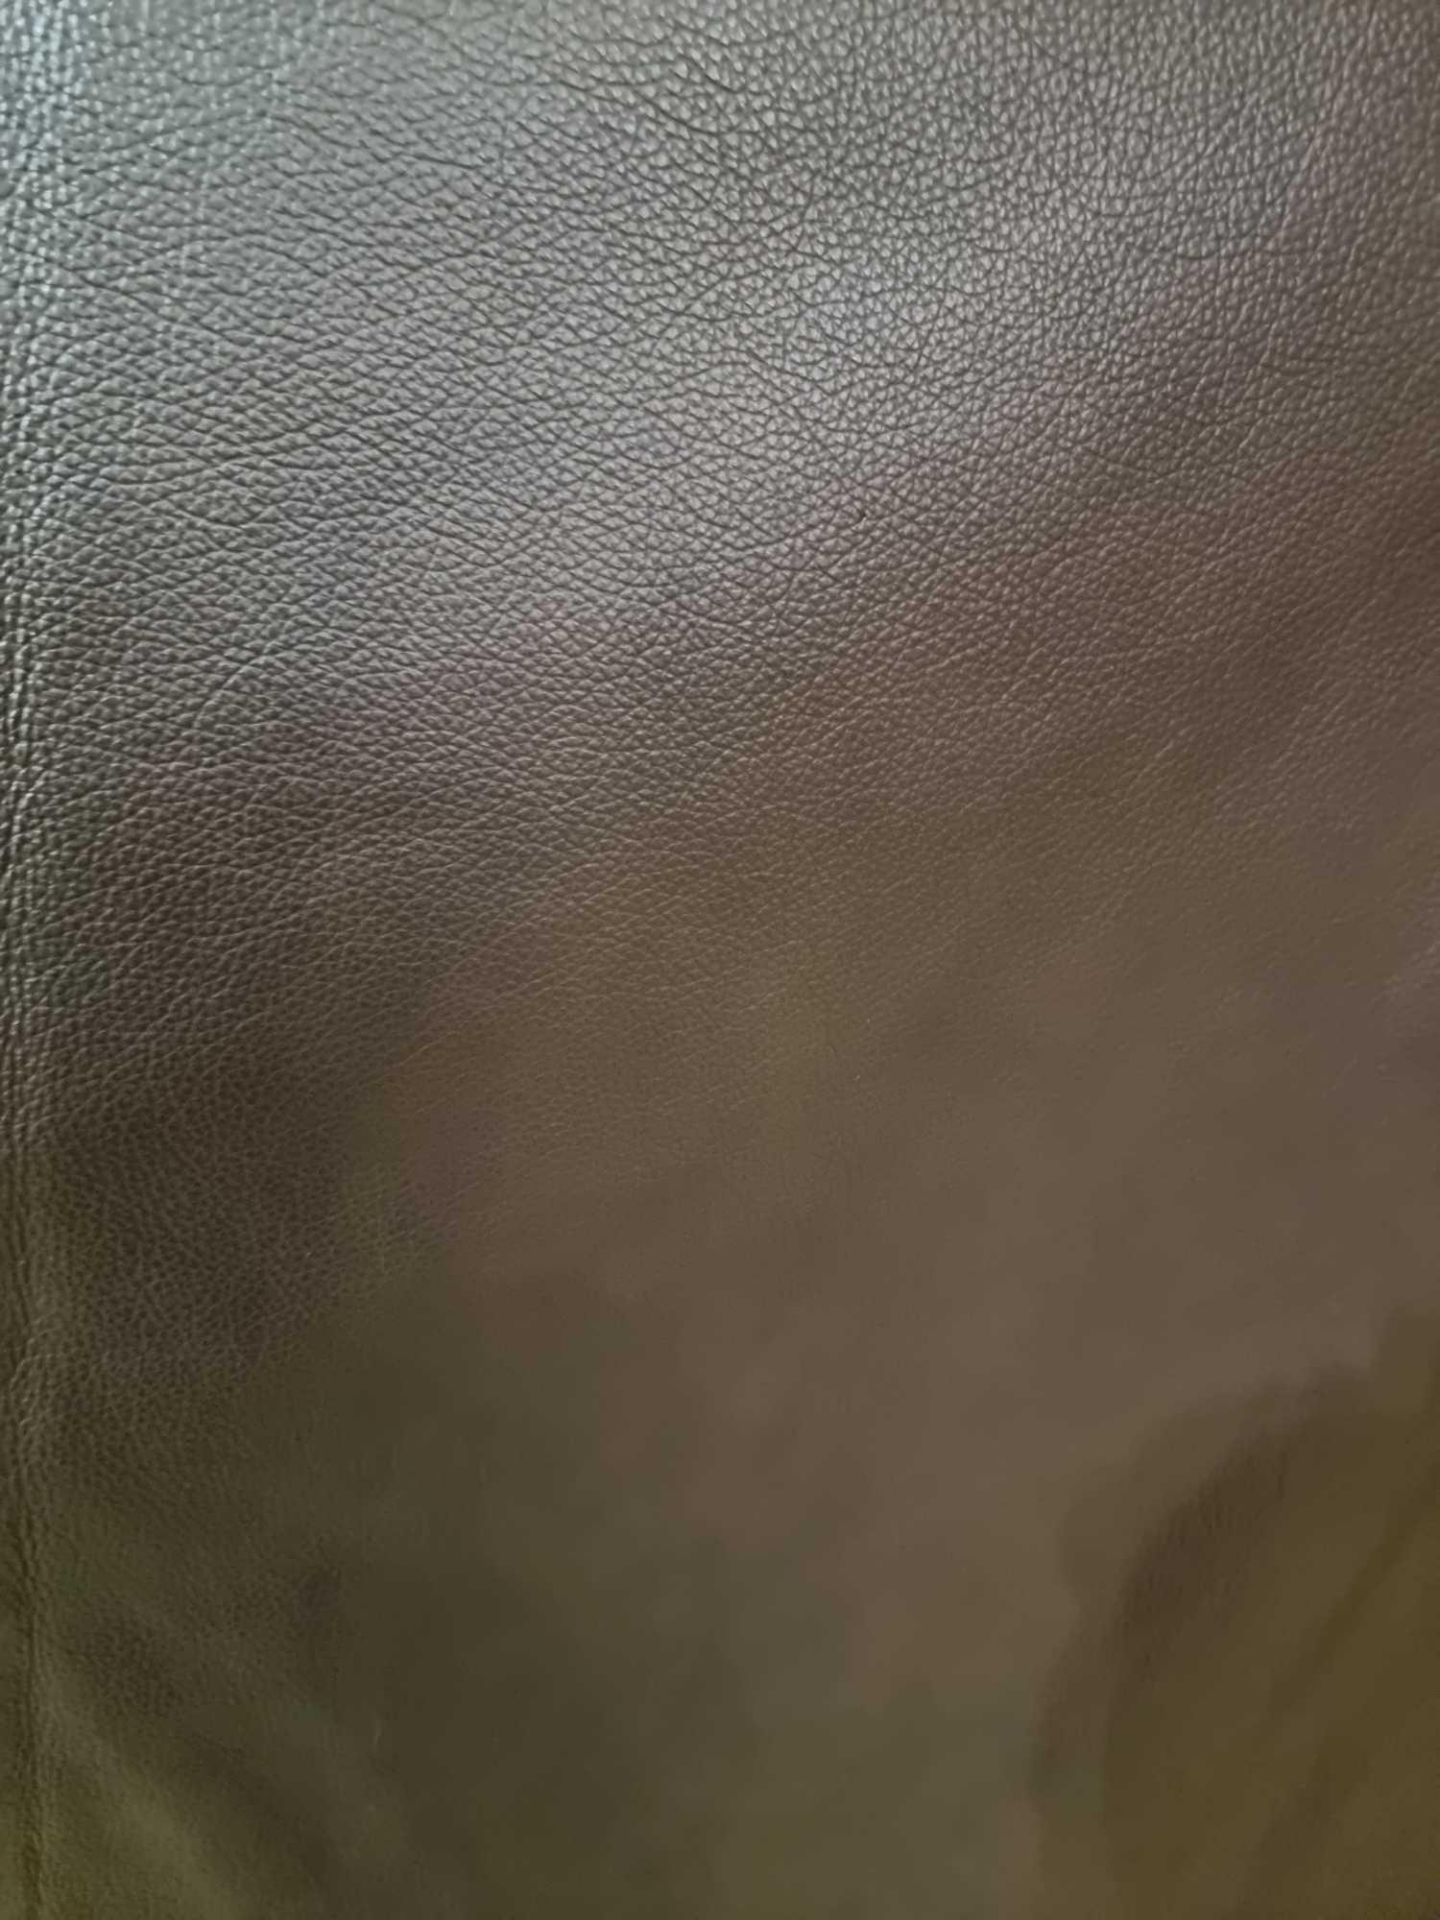 Dark Chocolate Calbe Leather Hide approximately 3.42mÂ² 1.9 x 1.8cm ( Hide No,65) - Bild 2 aus 3